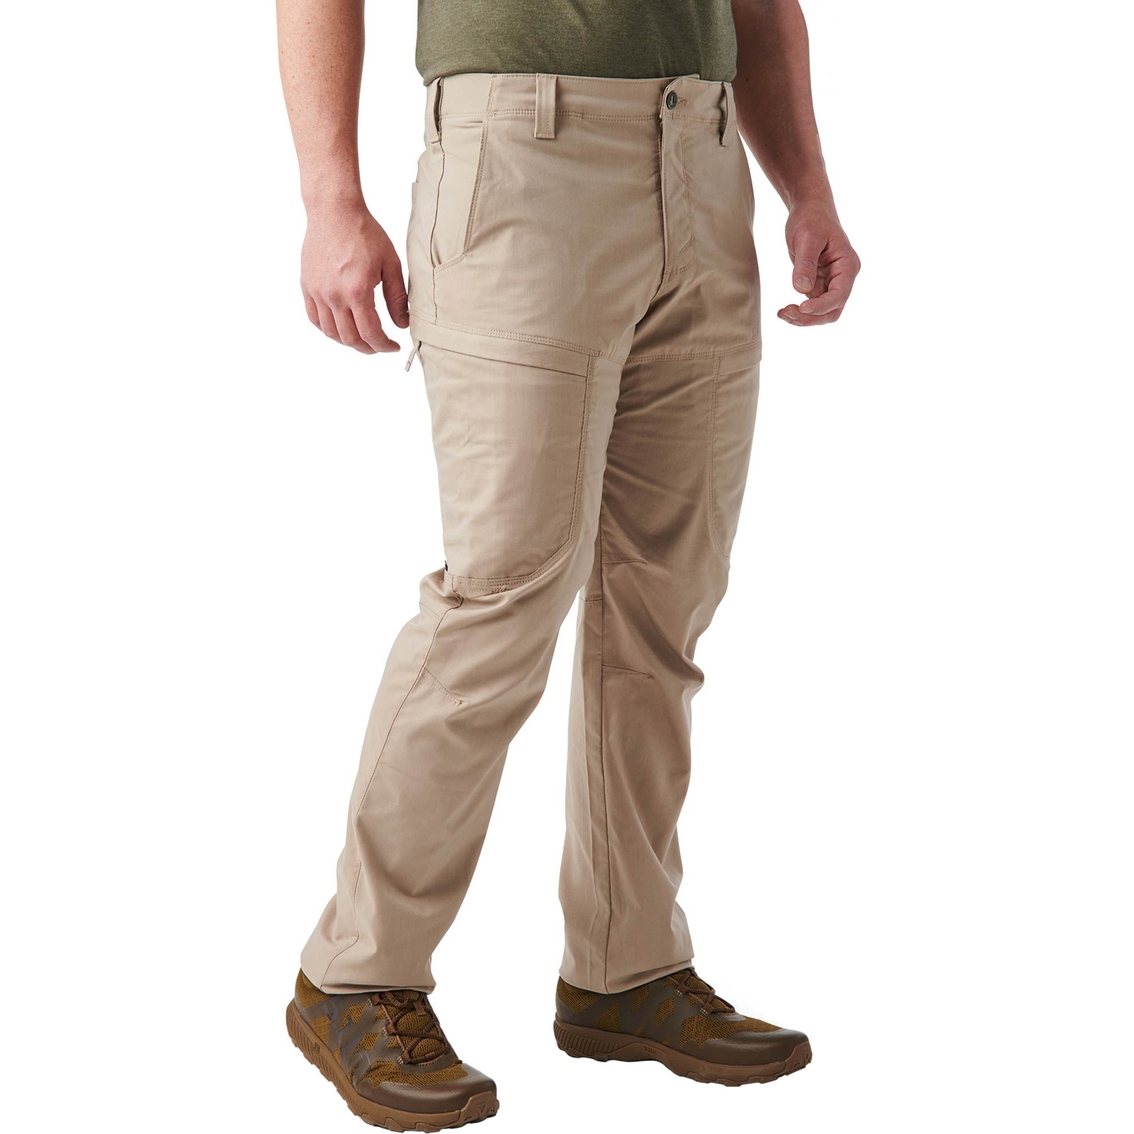 5.11 Tactical Ridge Pants - Image 4 of 8